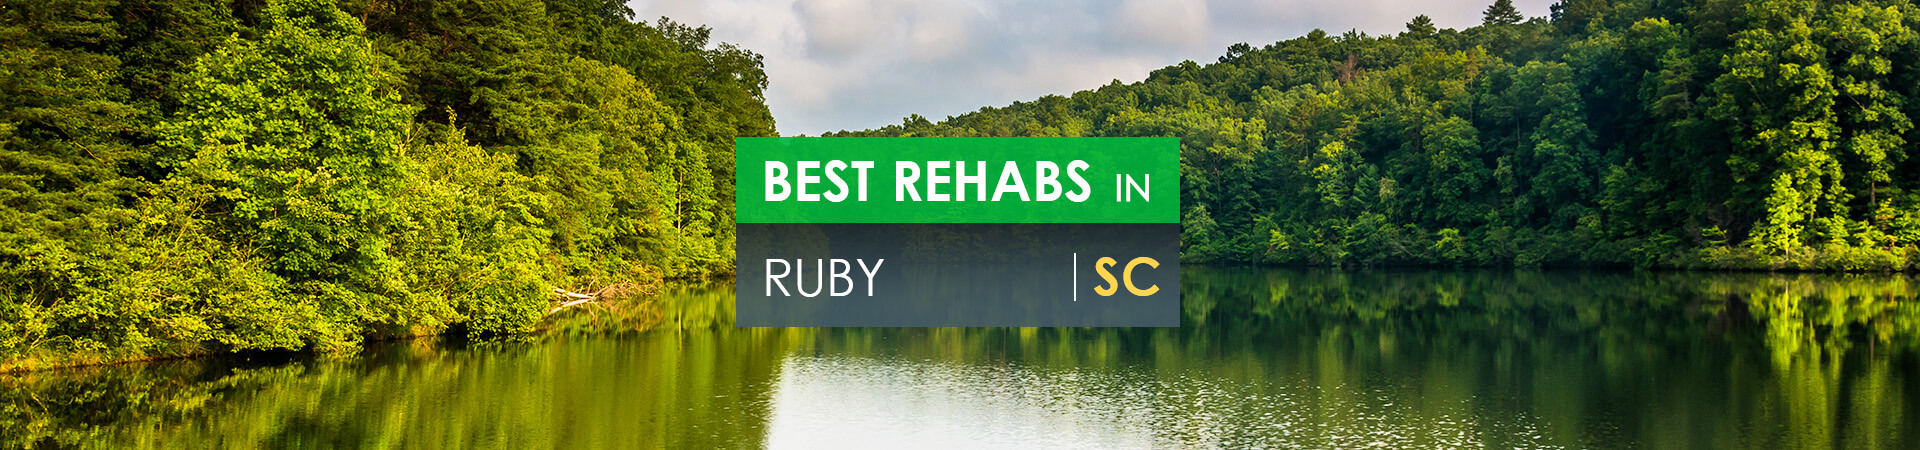 Best rehabs in Ruby, SC